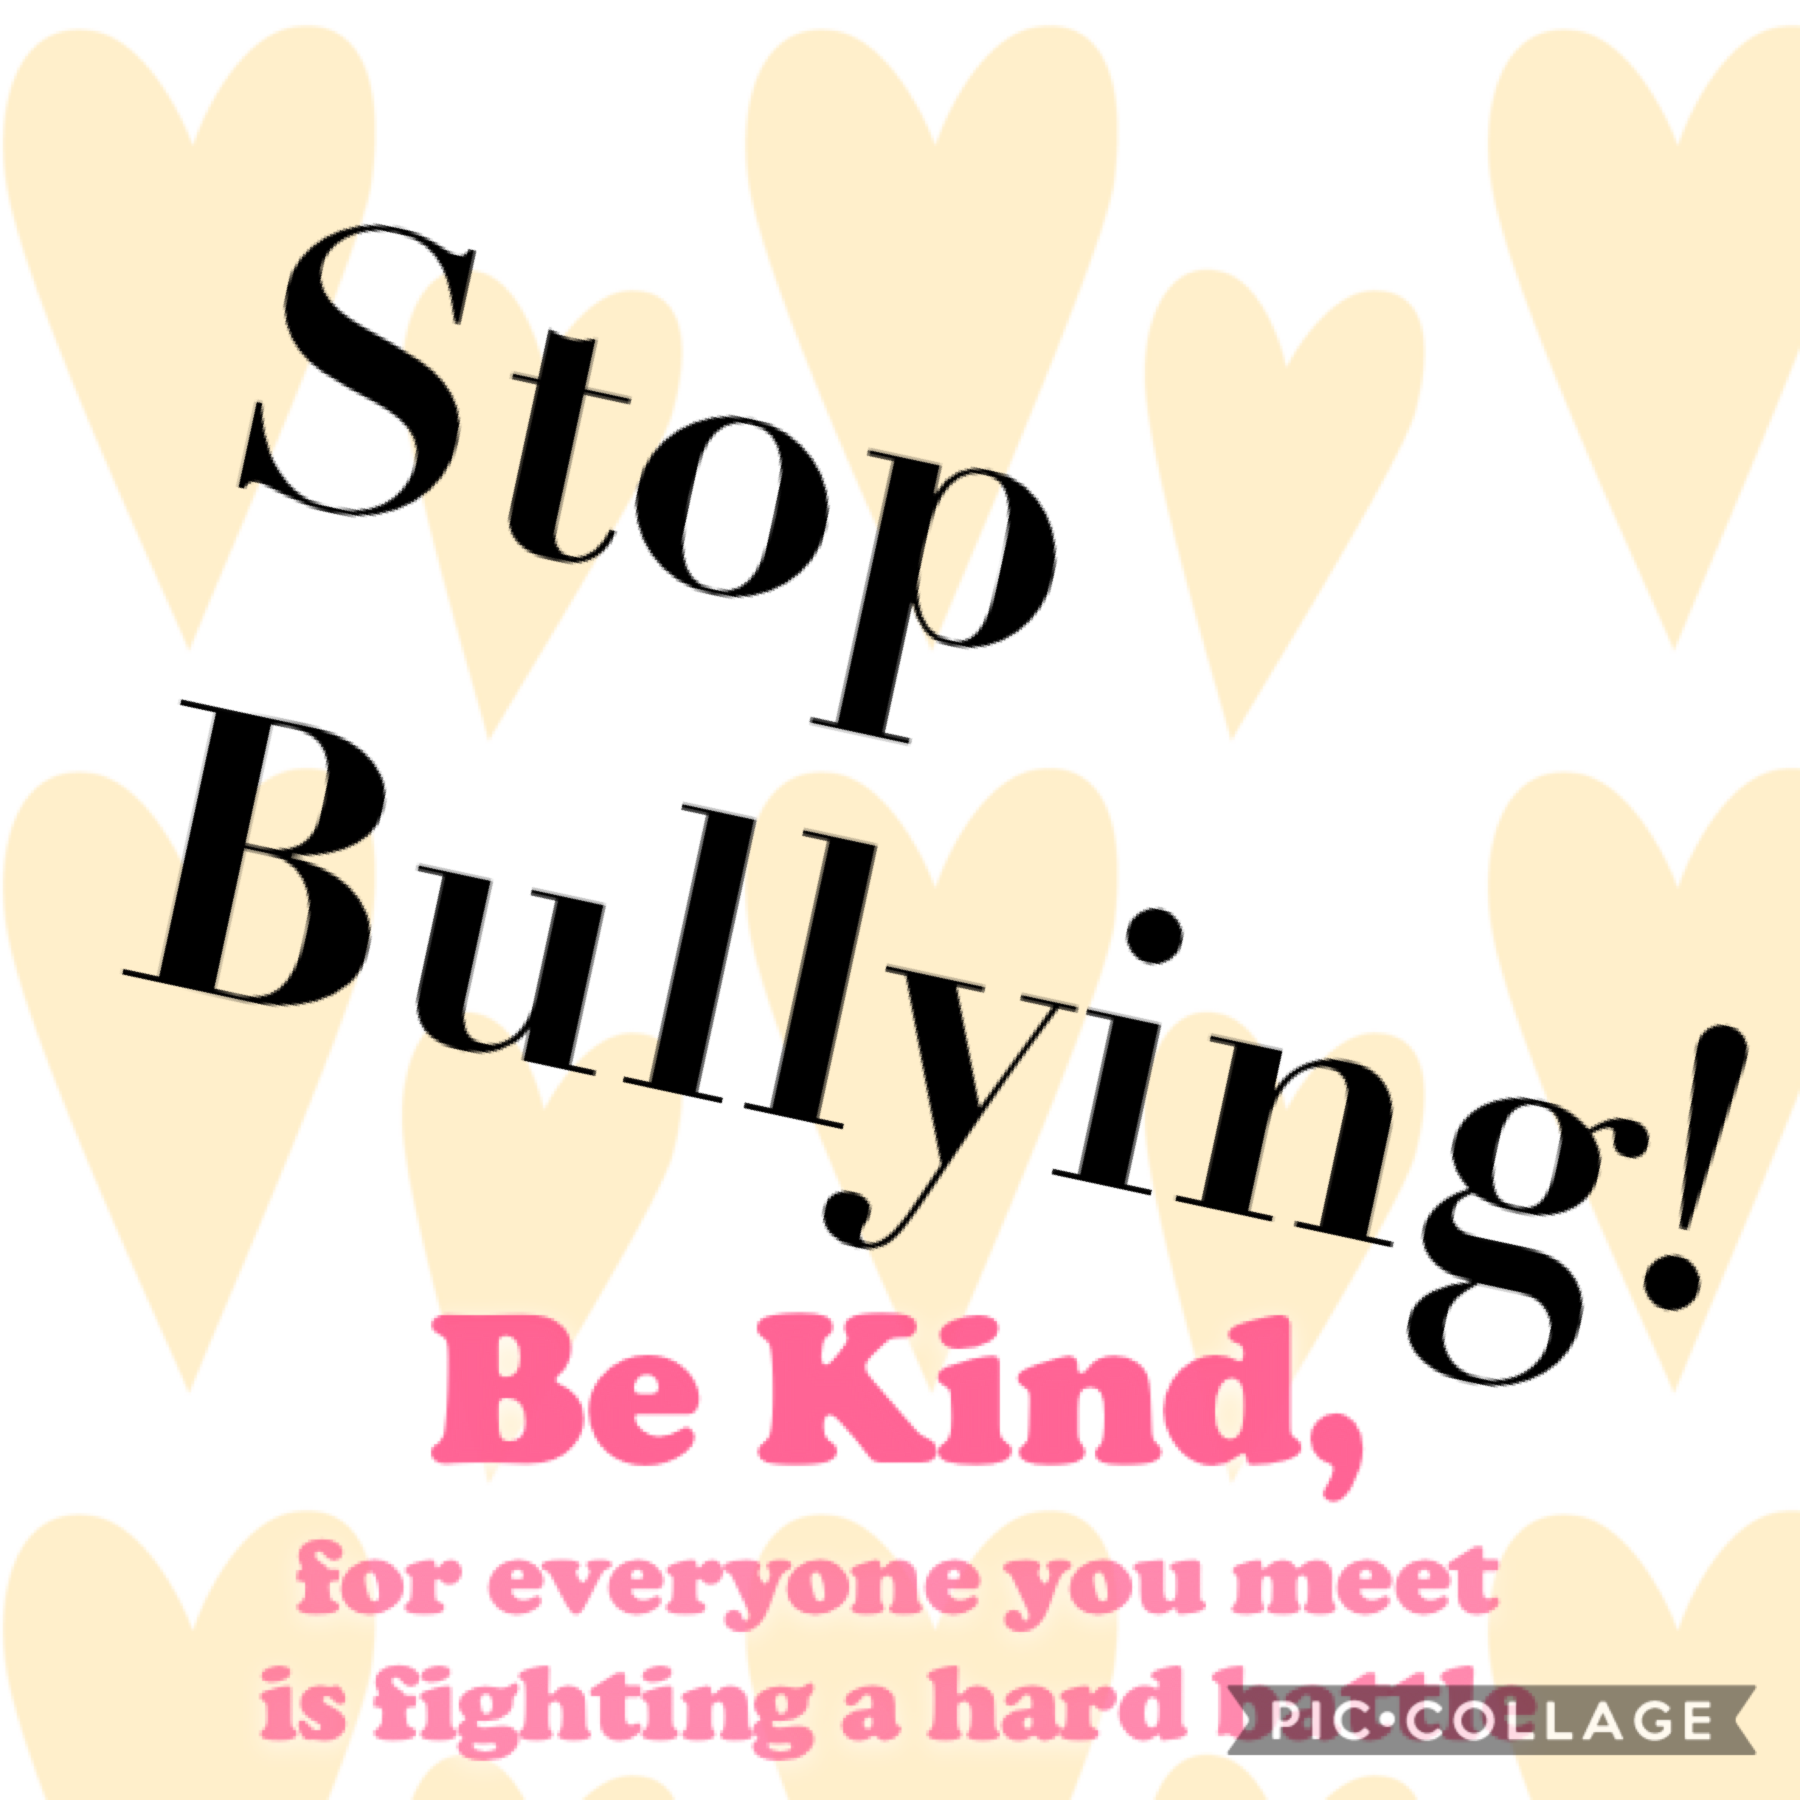 Stop bulling! Be nice!!